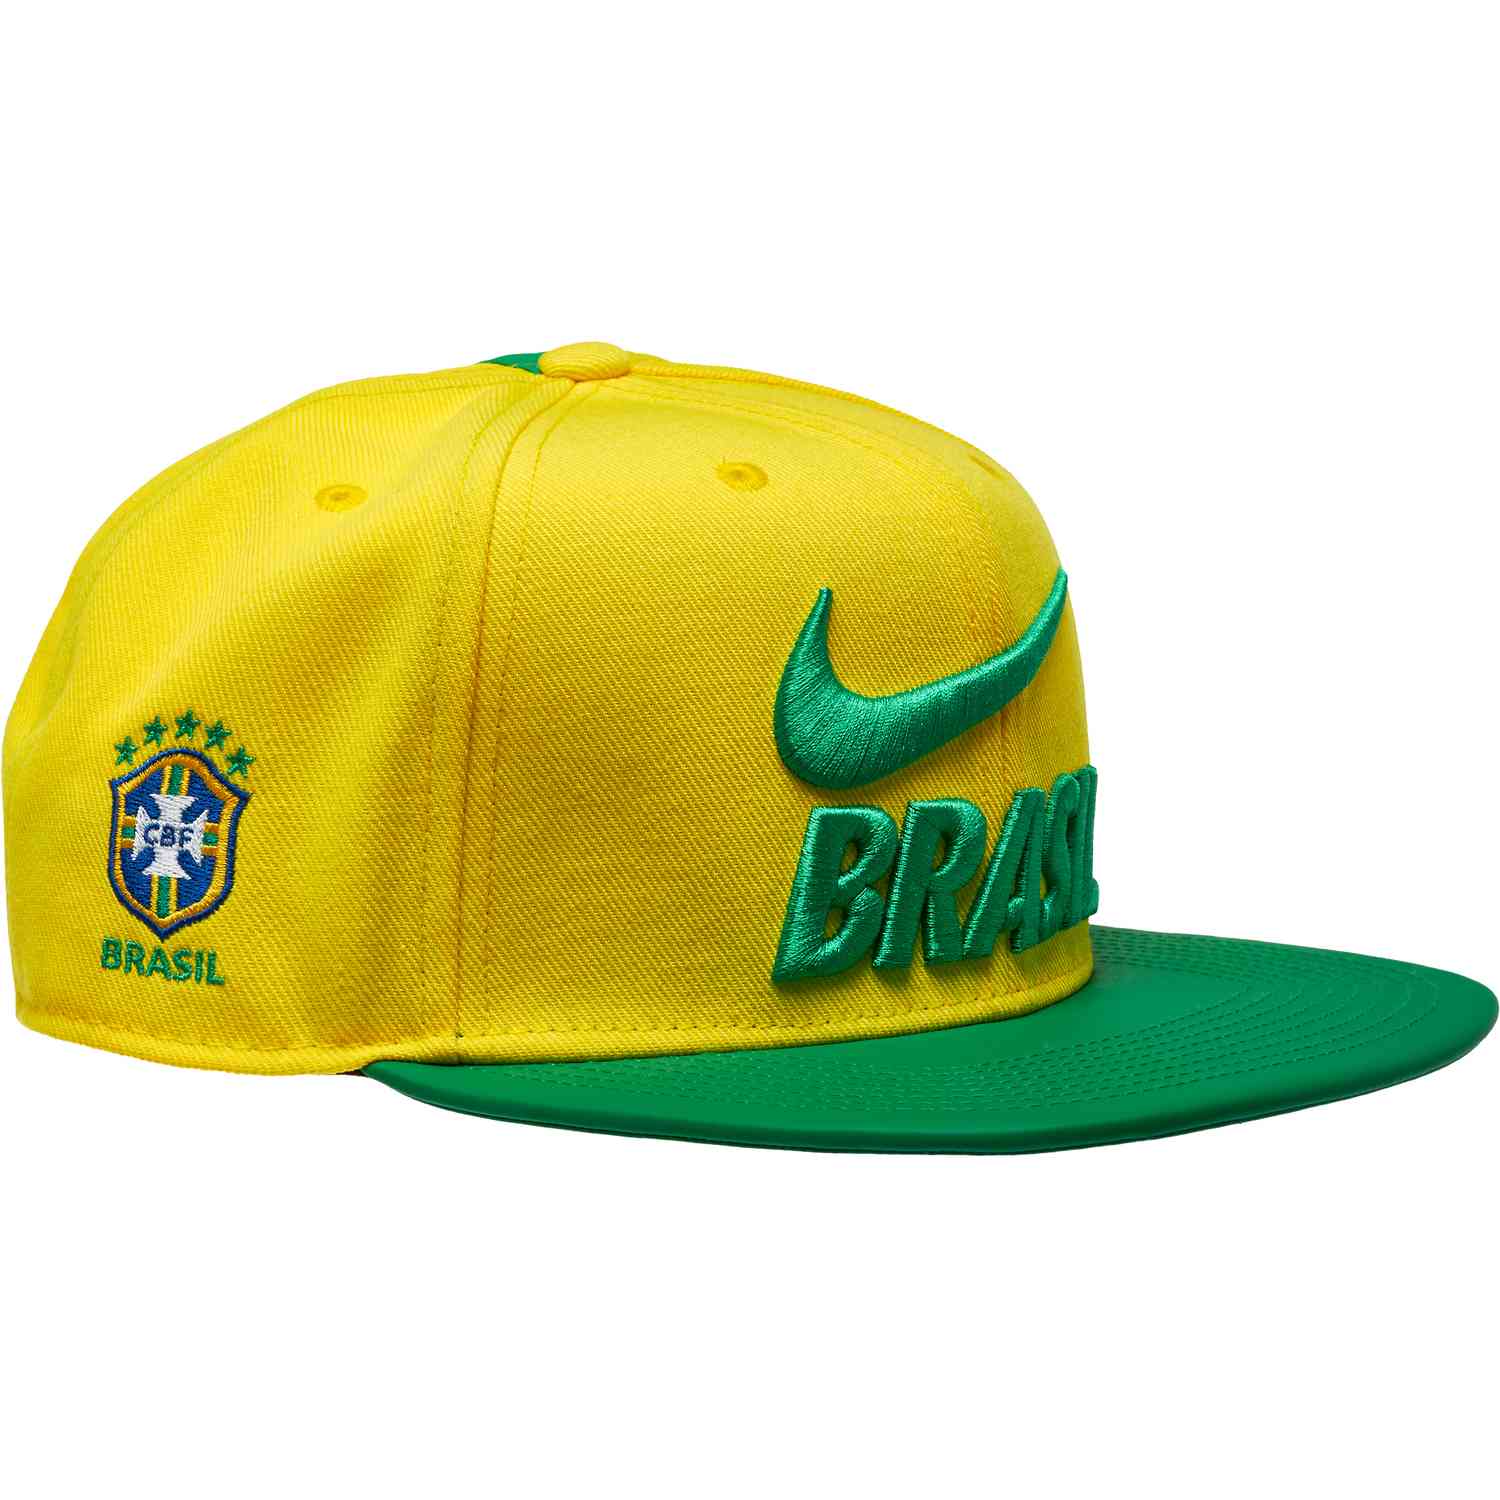 Nike Brazil Pride Flat Bill Cap - Midwest gold/Lucky Green/Pine Green -  SoccerPro